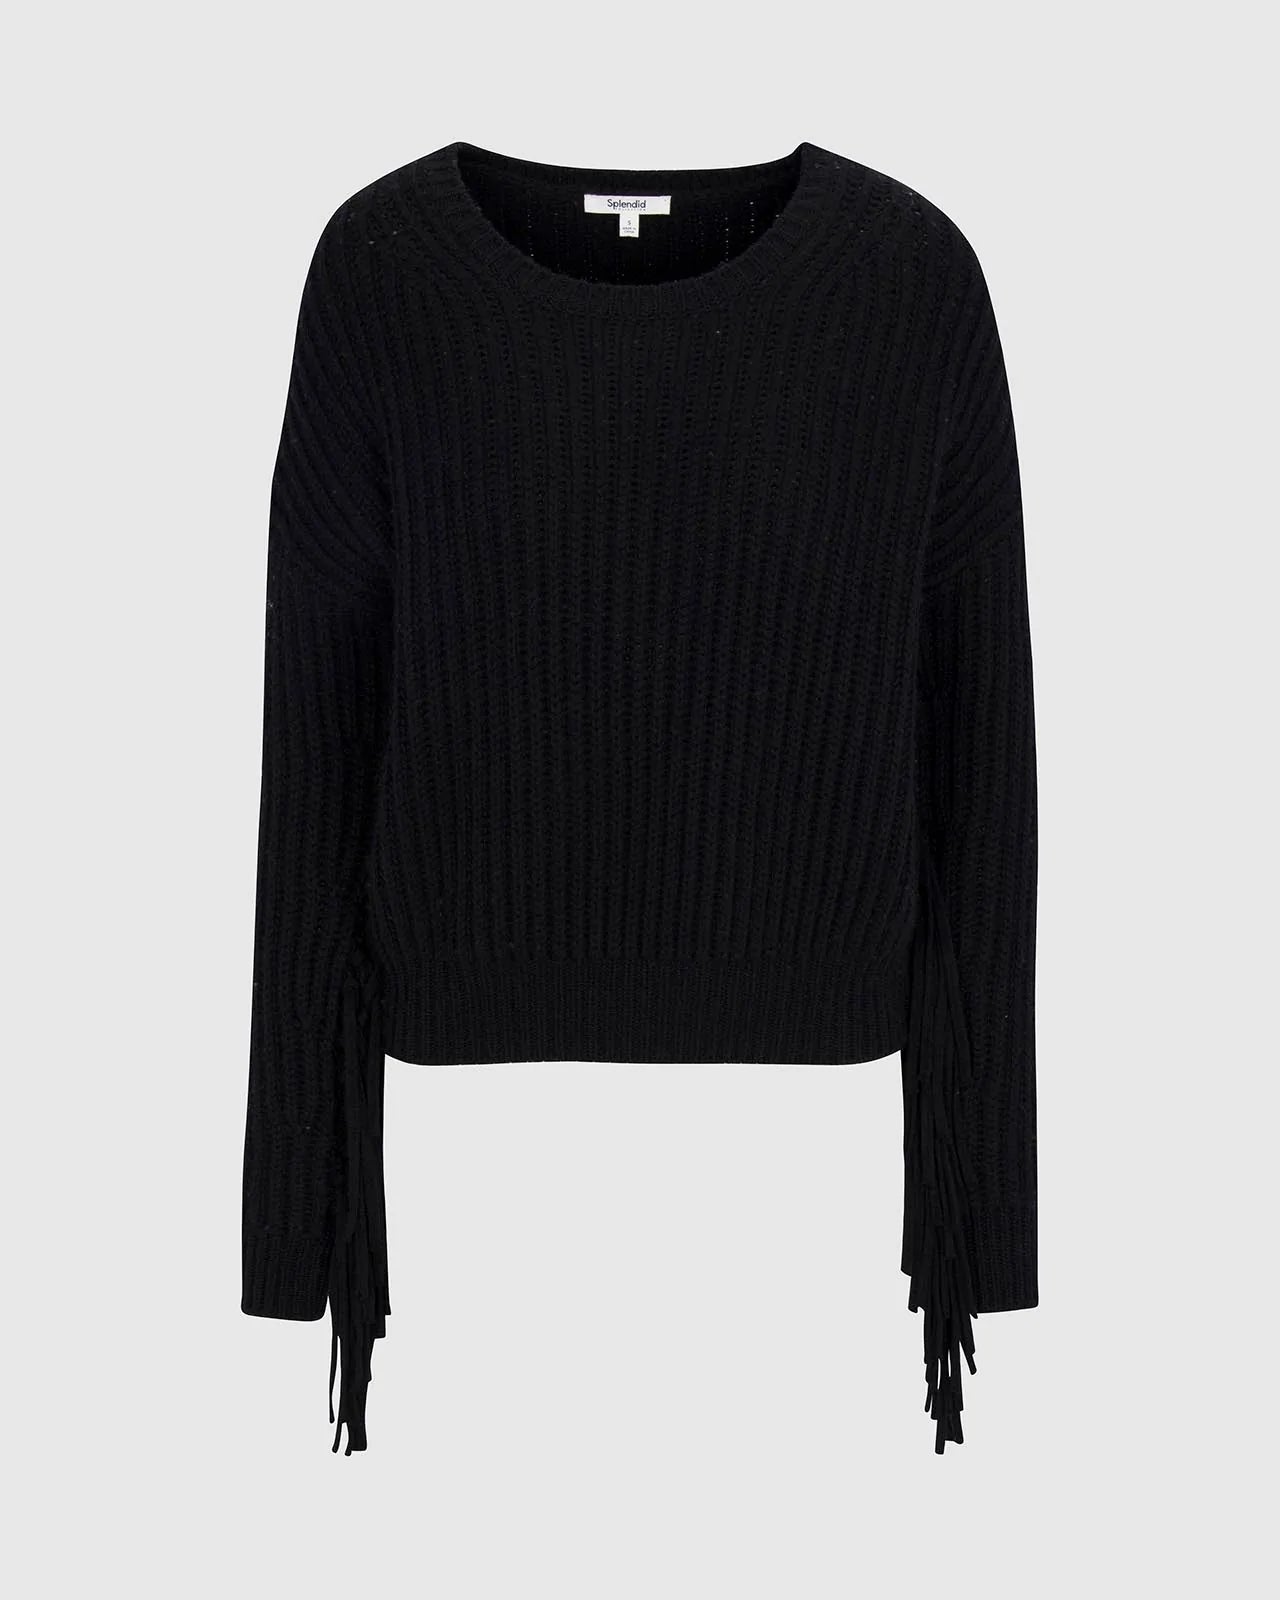 Splendid ‘Britian Fringe Sweater’